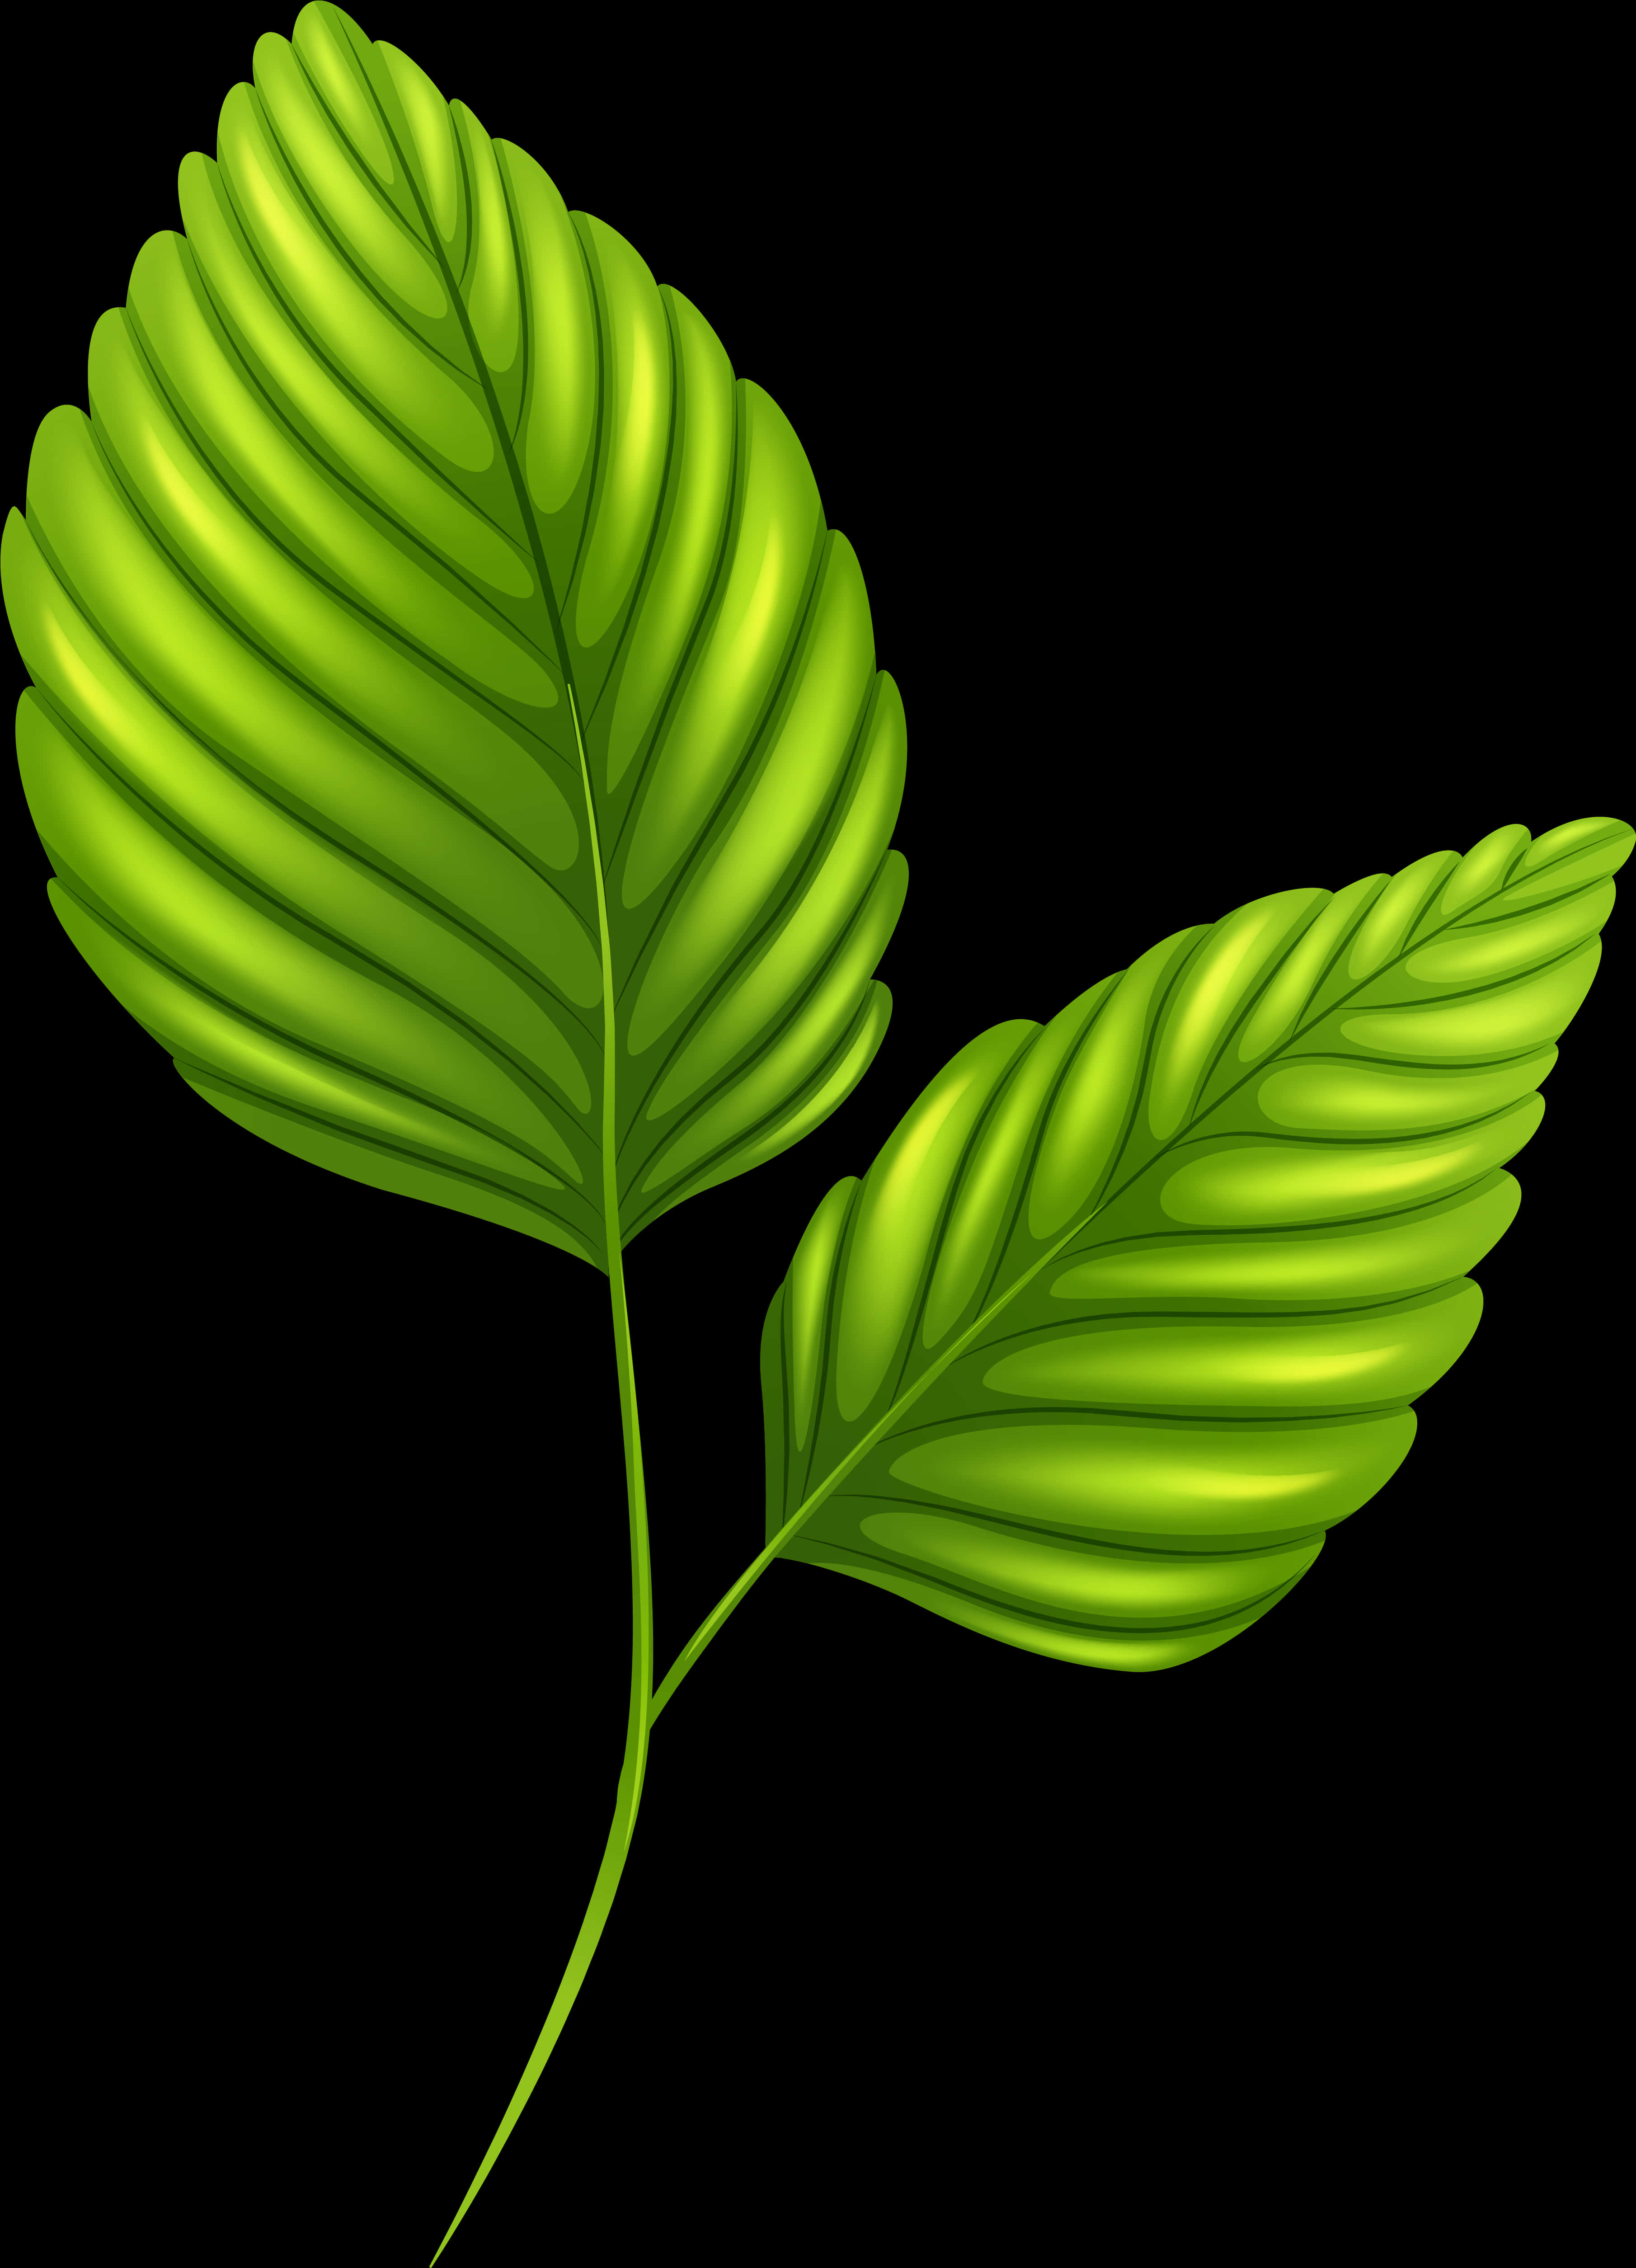 Vibrant Green Leaves Illustration PNG